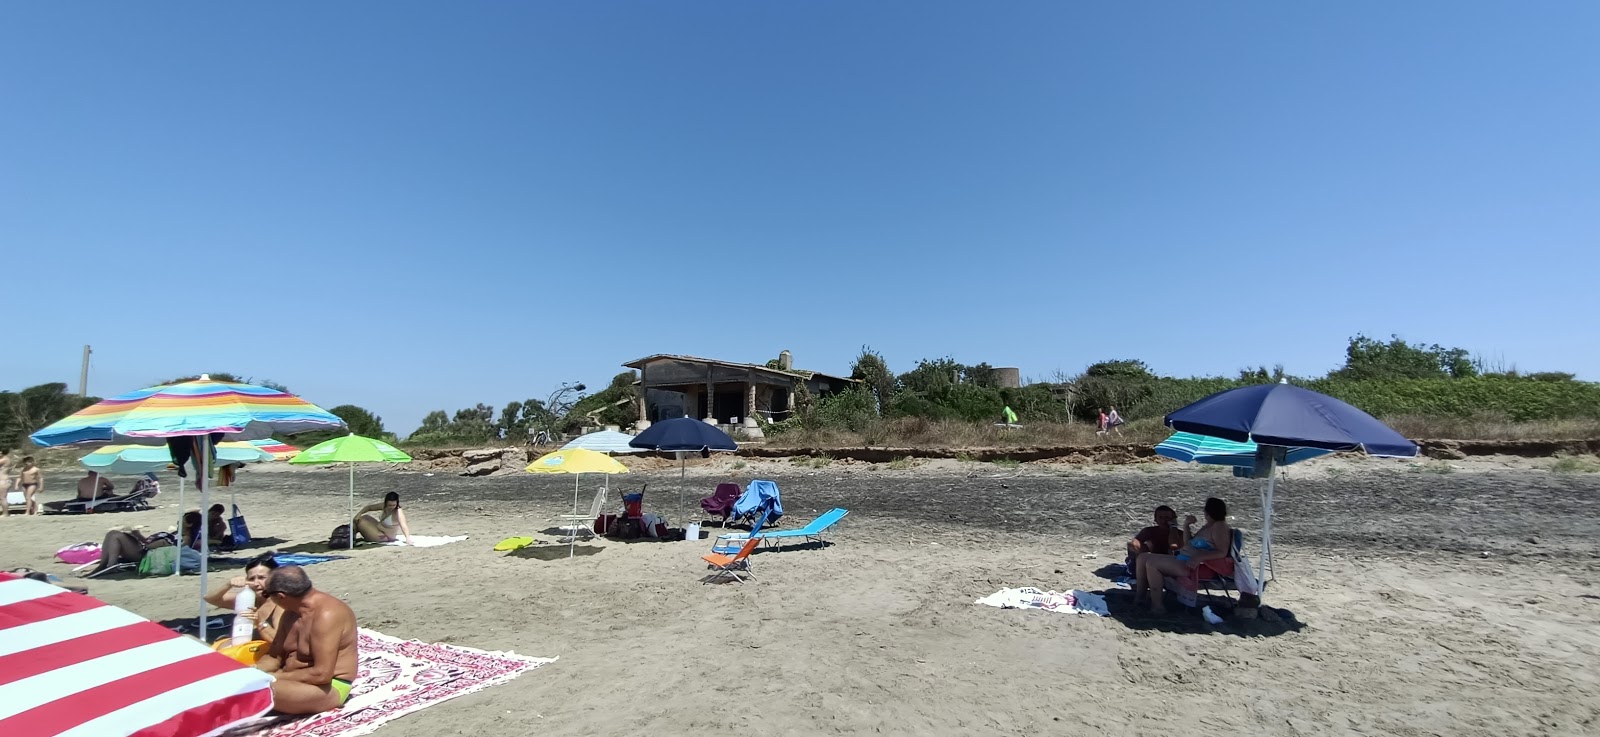 Foto av Spiaggia di Valmontorio med medium nivå av renlighet